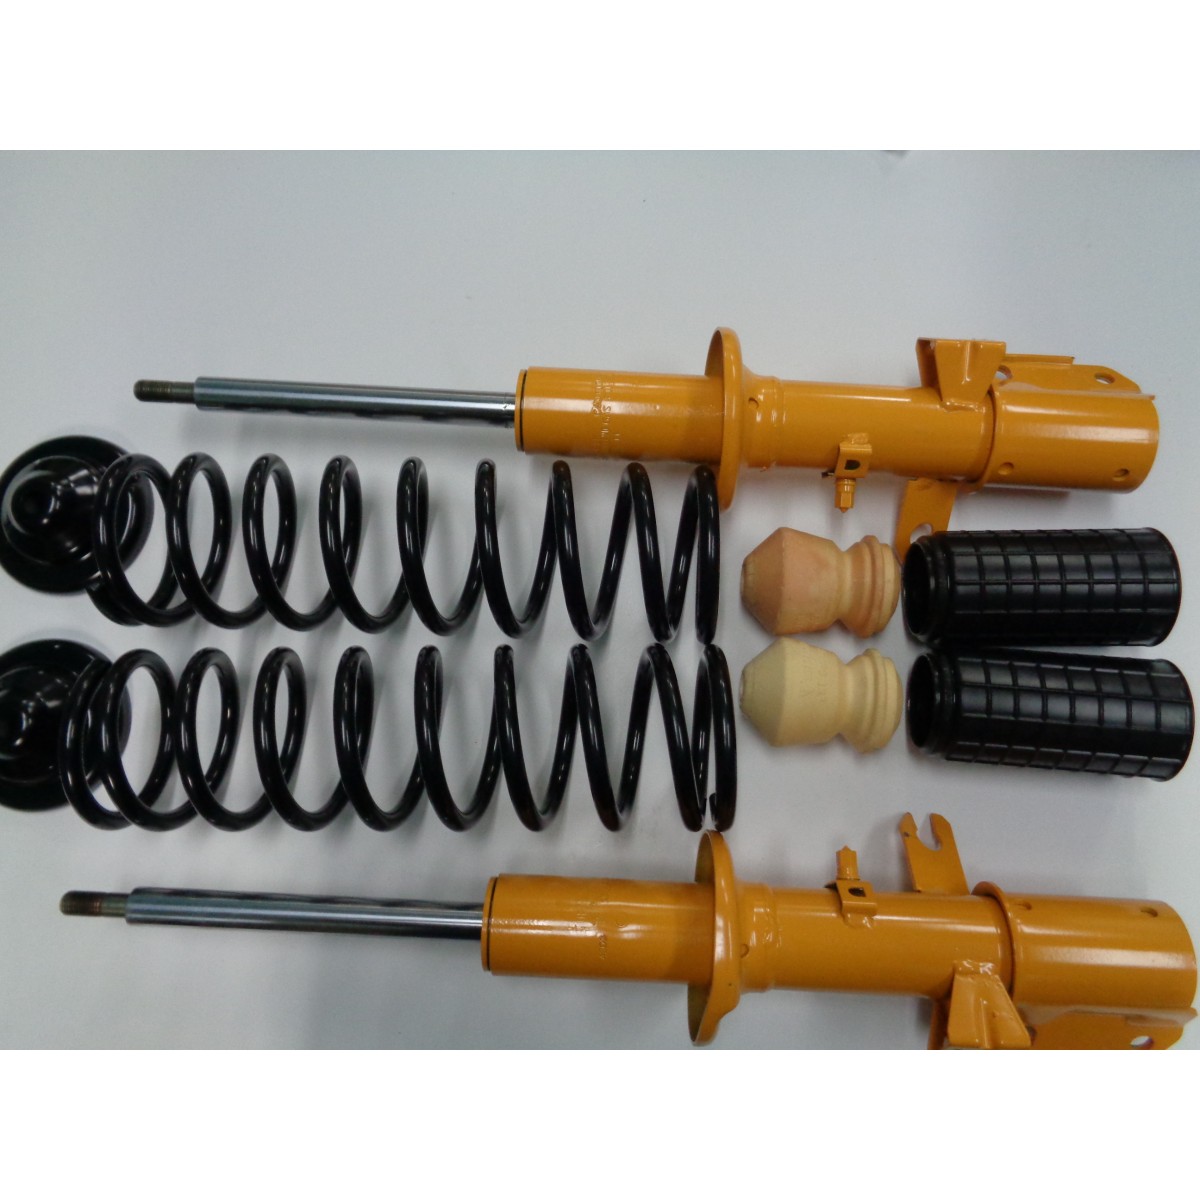 Koni Sport Suspension Upgrade Kit M474 944 951 944s2 968 87 to 95